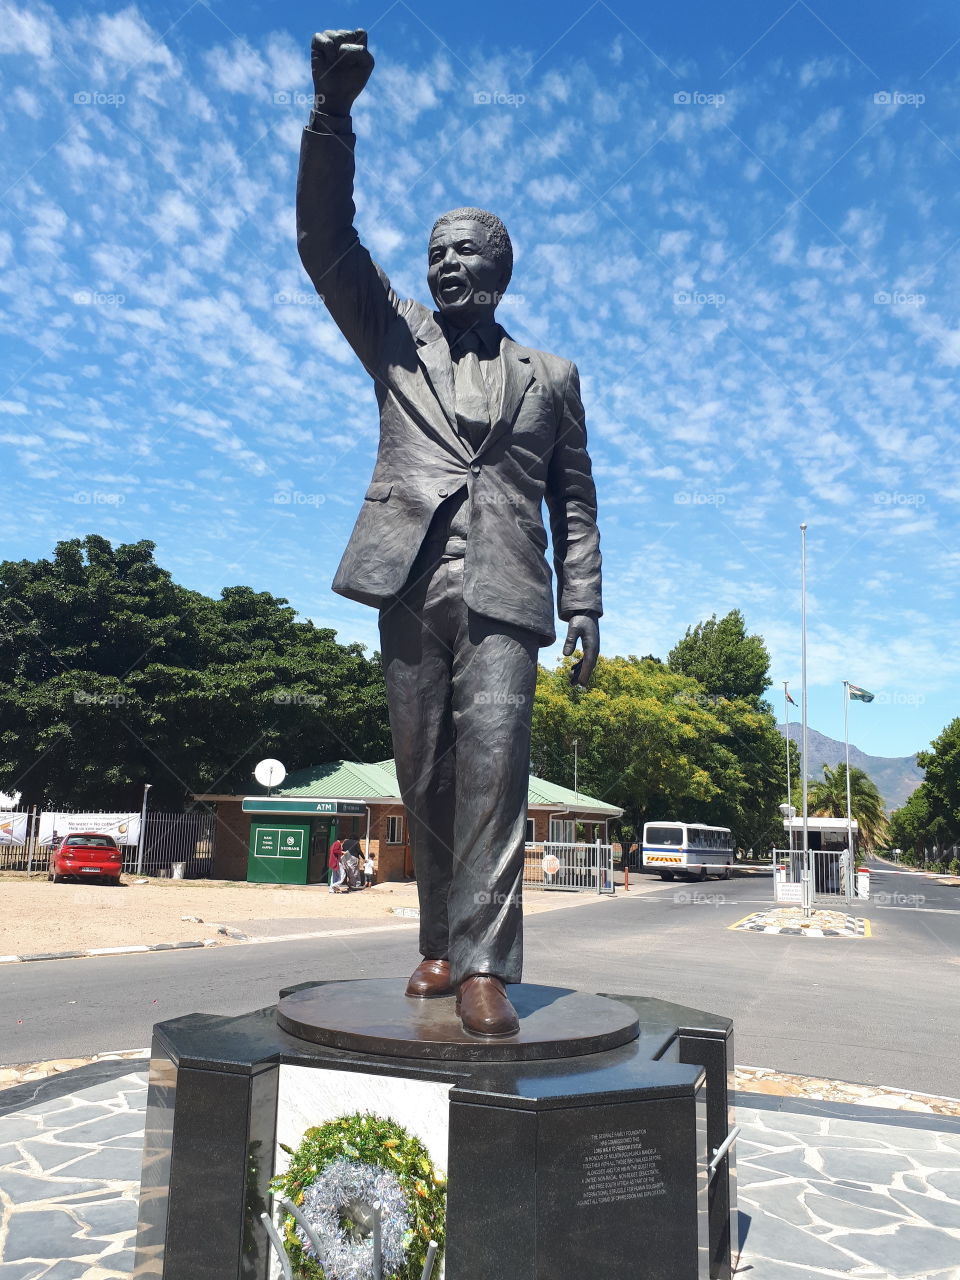 Legacy of Nelson Mandela